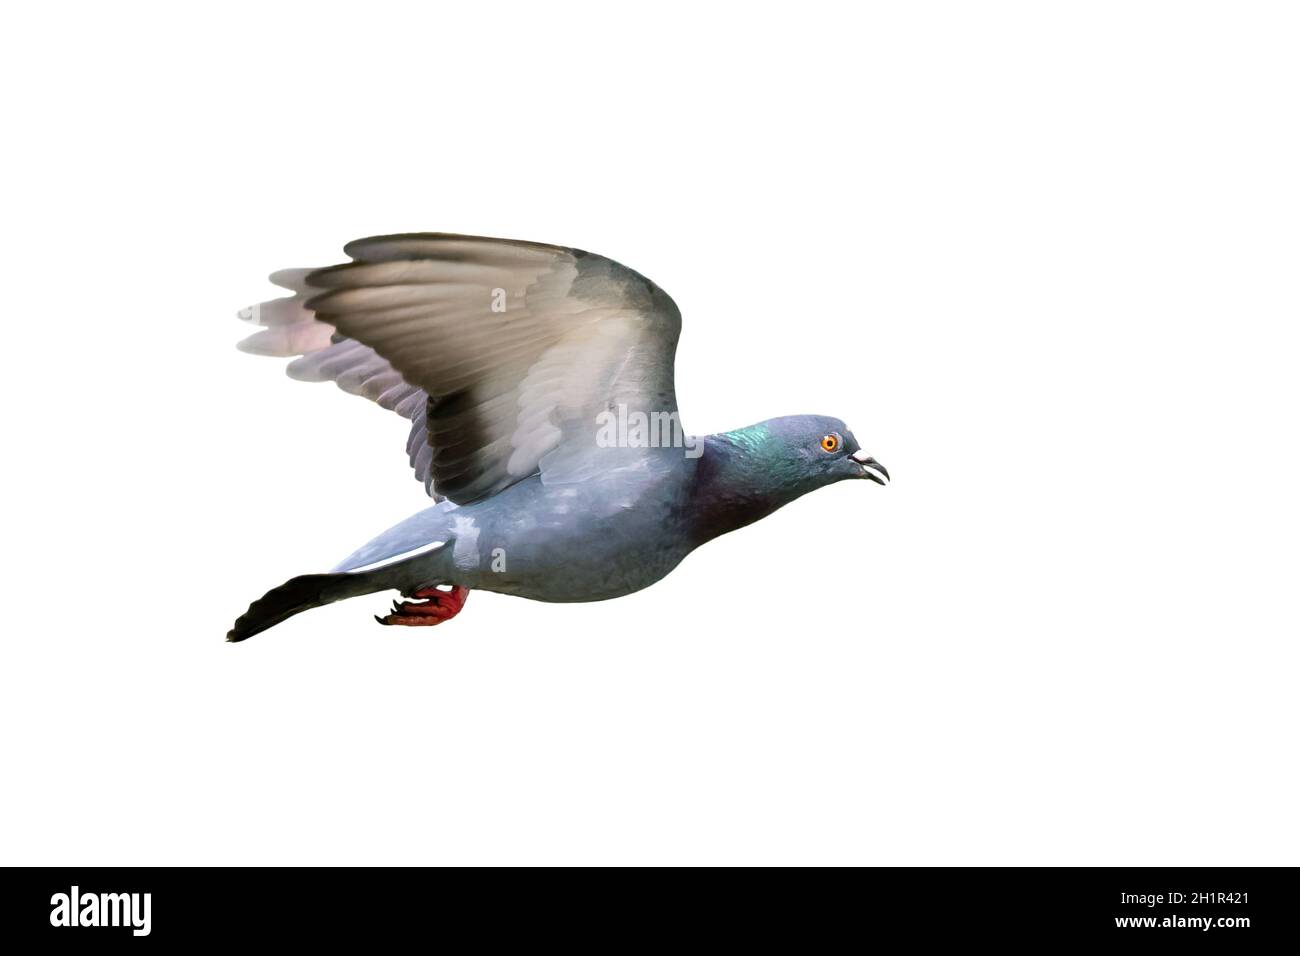 Image of pigeon flying isolated on white background., Bird, Animals. Stock Photo